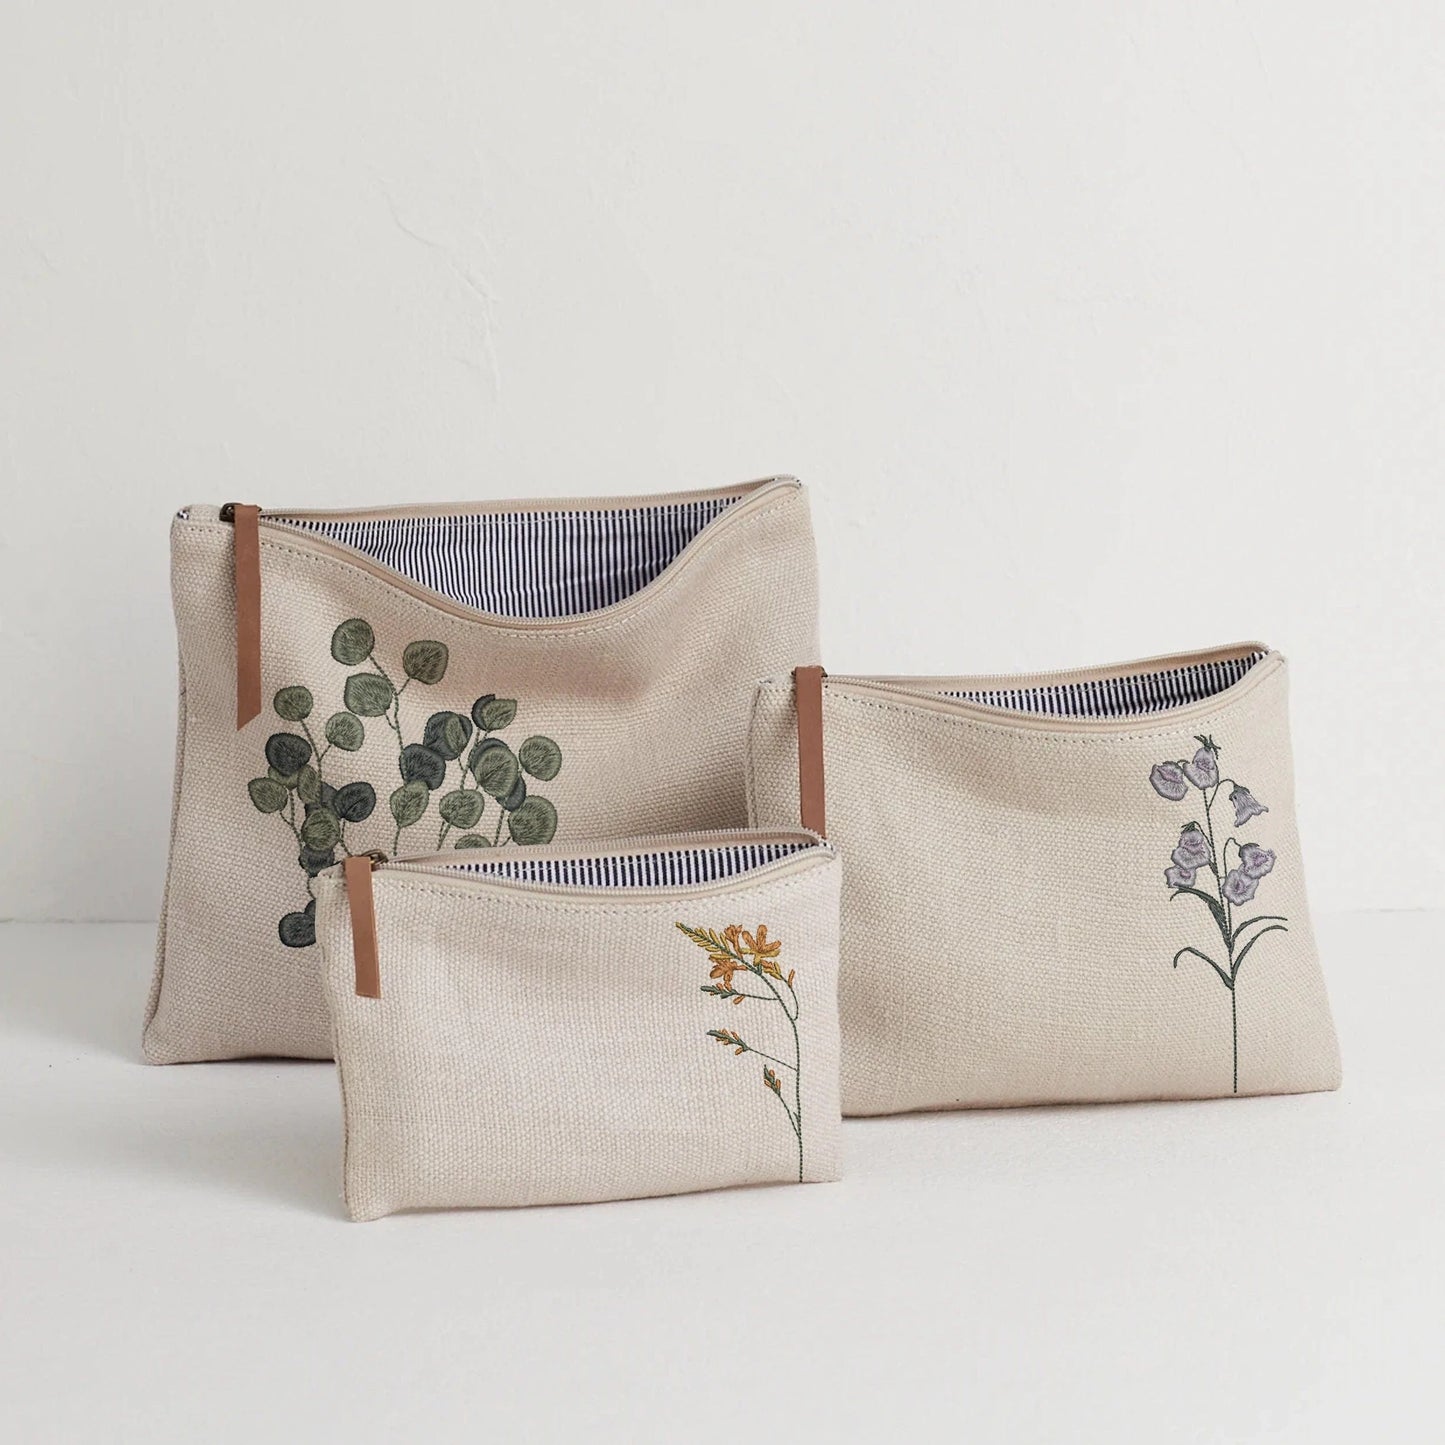 Eucalyptus machine embroidery design bags